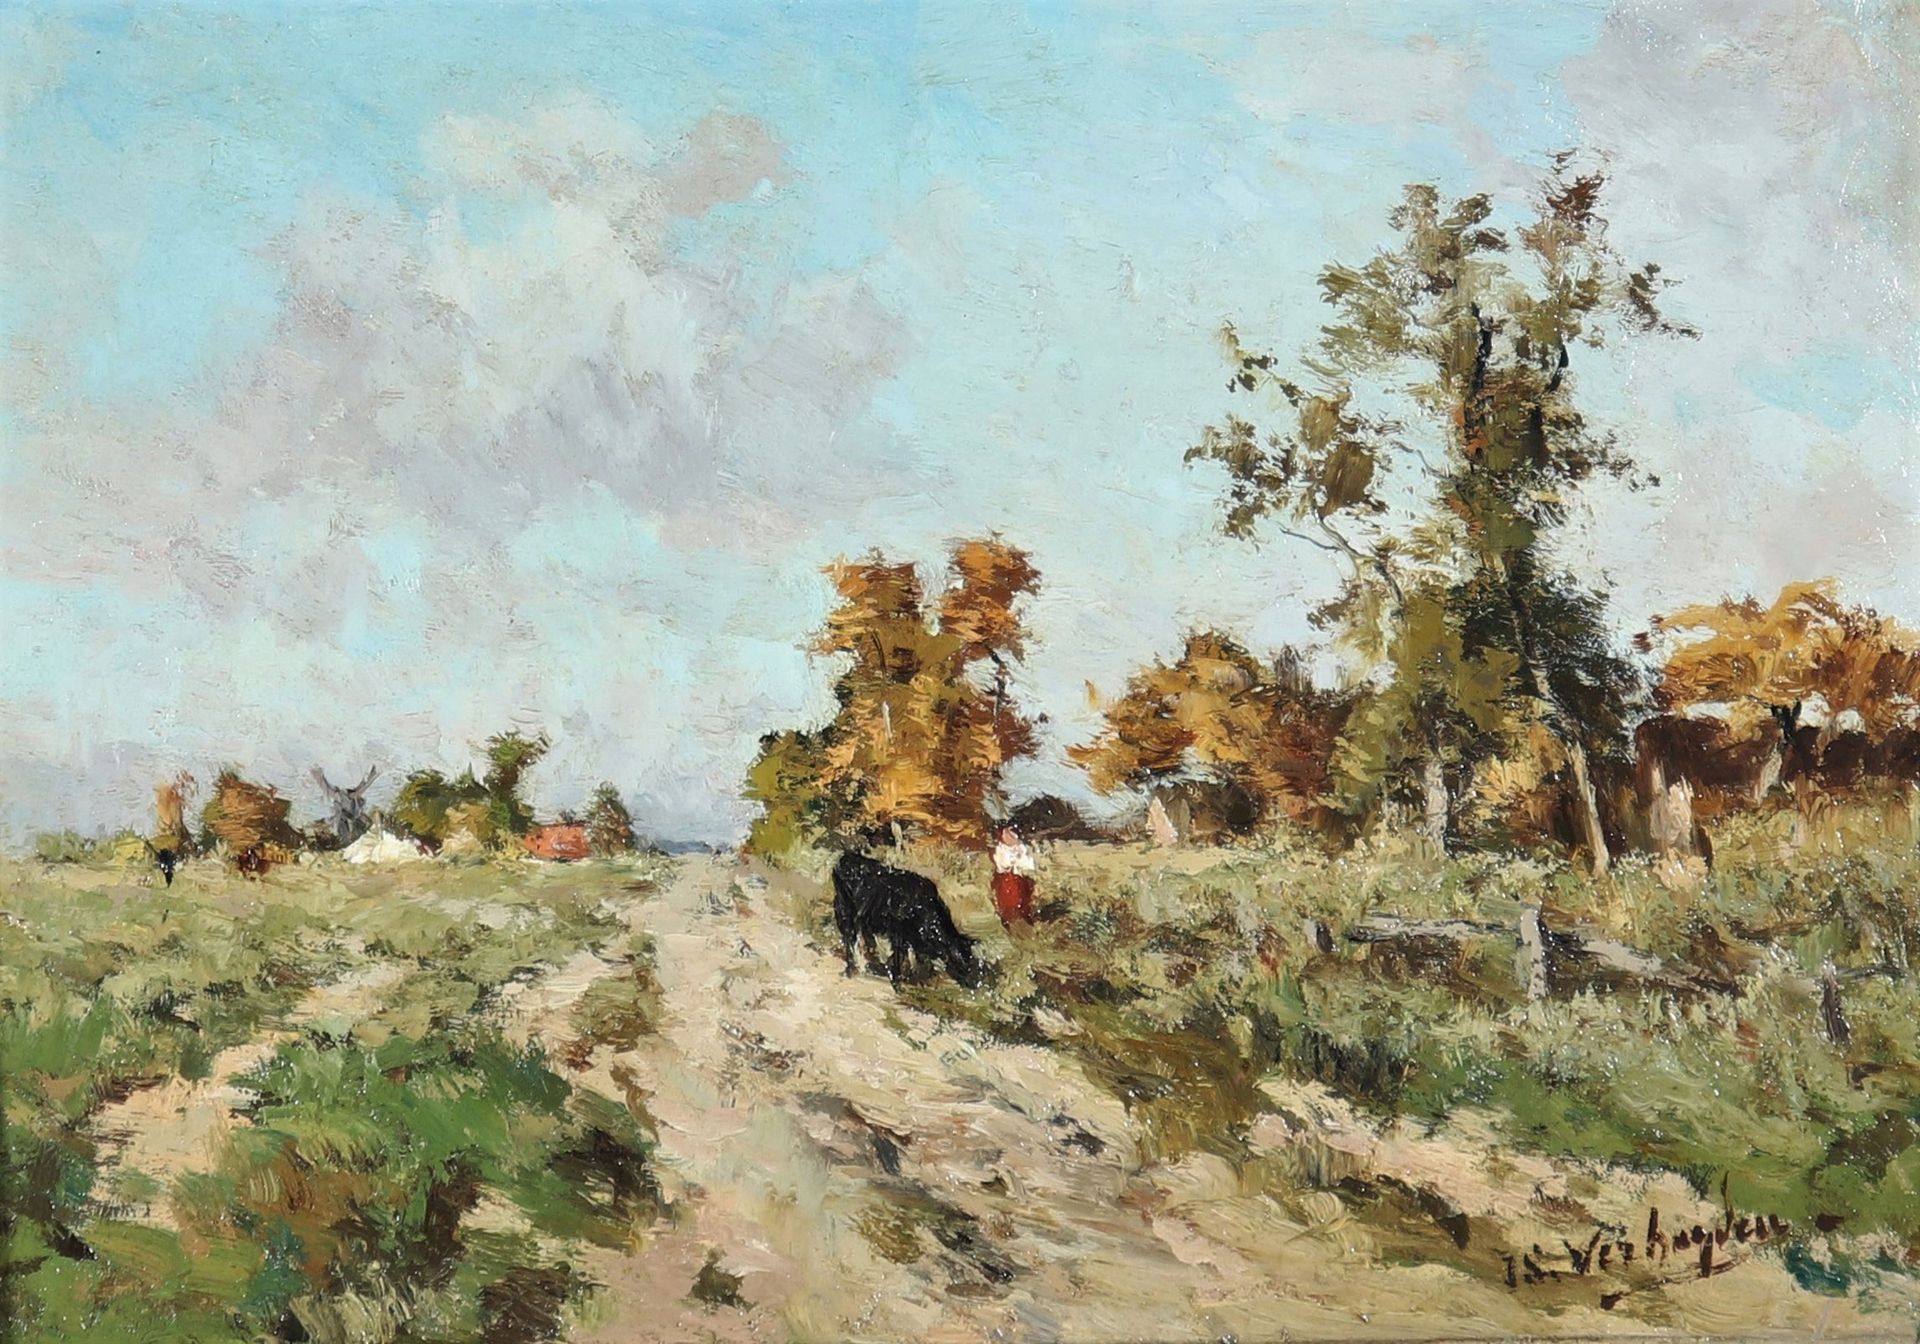 Isidore VERHEYDEN (1846-1905) "paysage animé" Isidore VERHEYDEN (1846-1905) "pae&hellip;